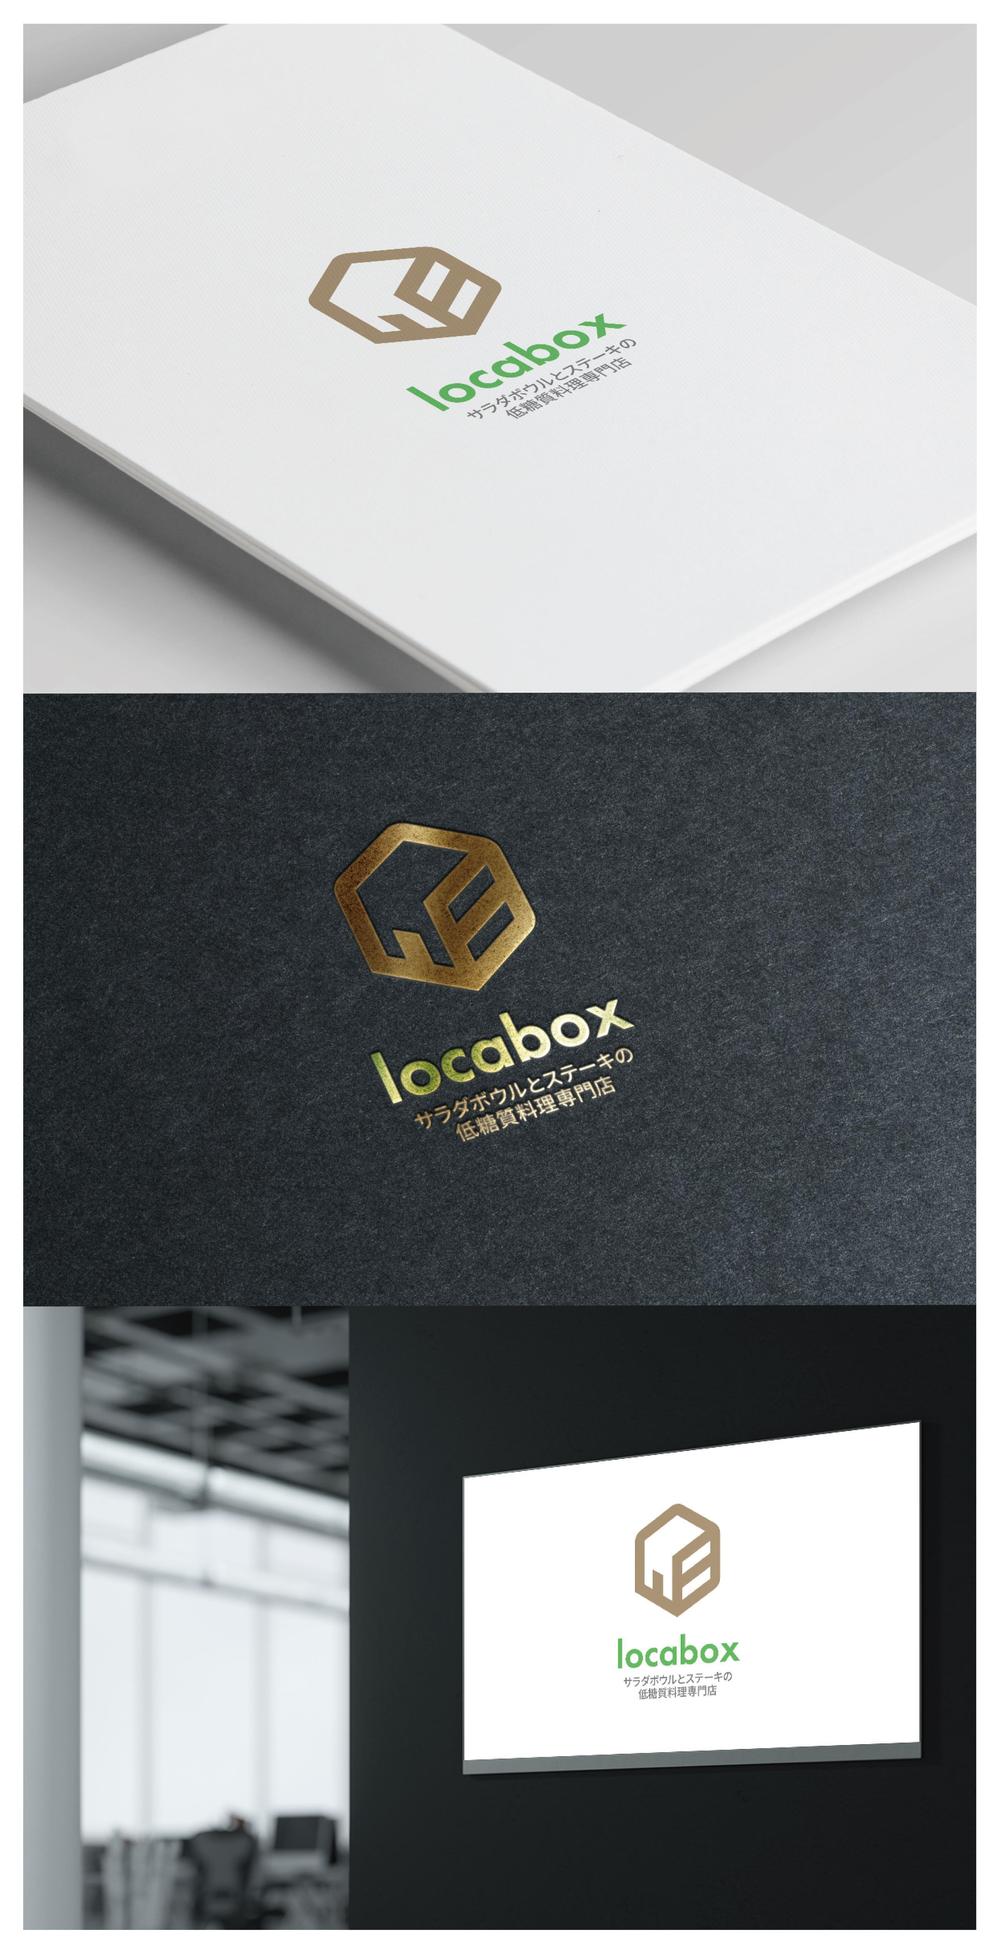 locabox_logo02_01.jpg